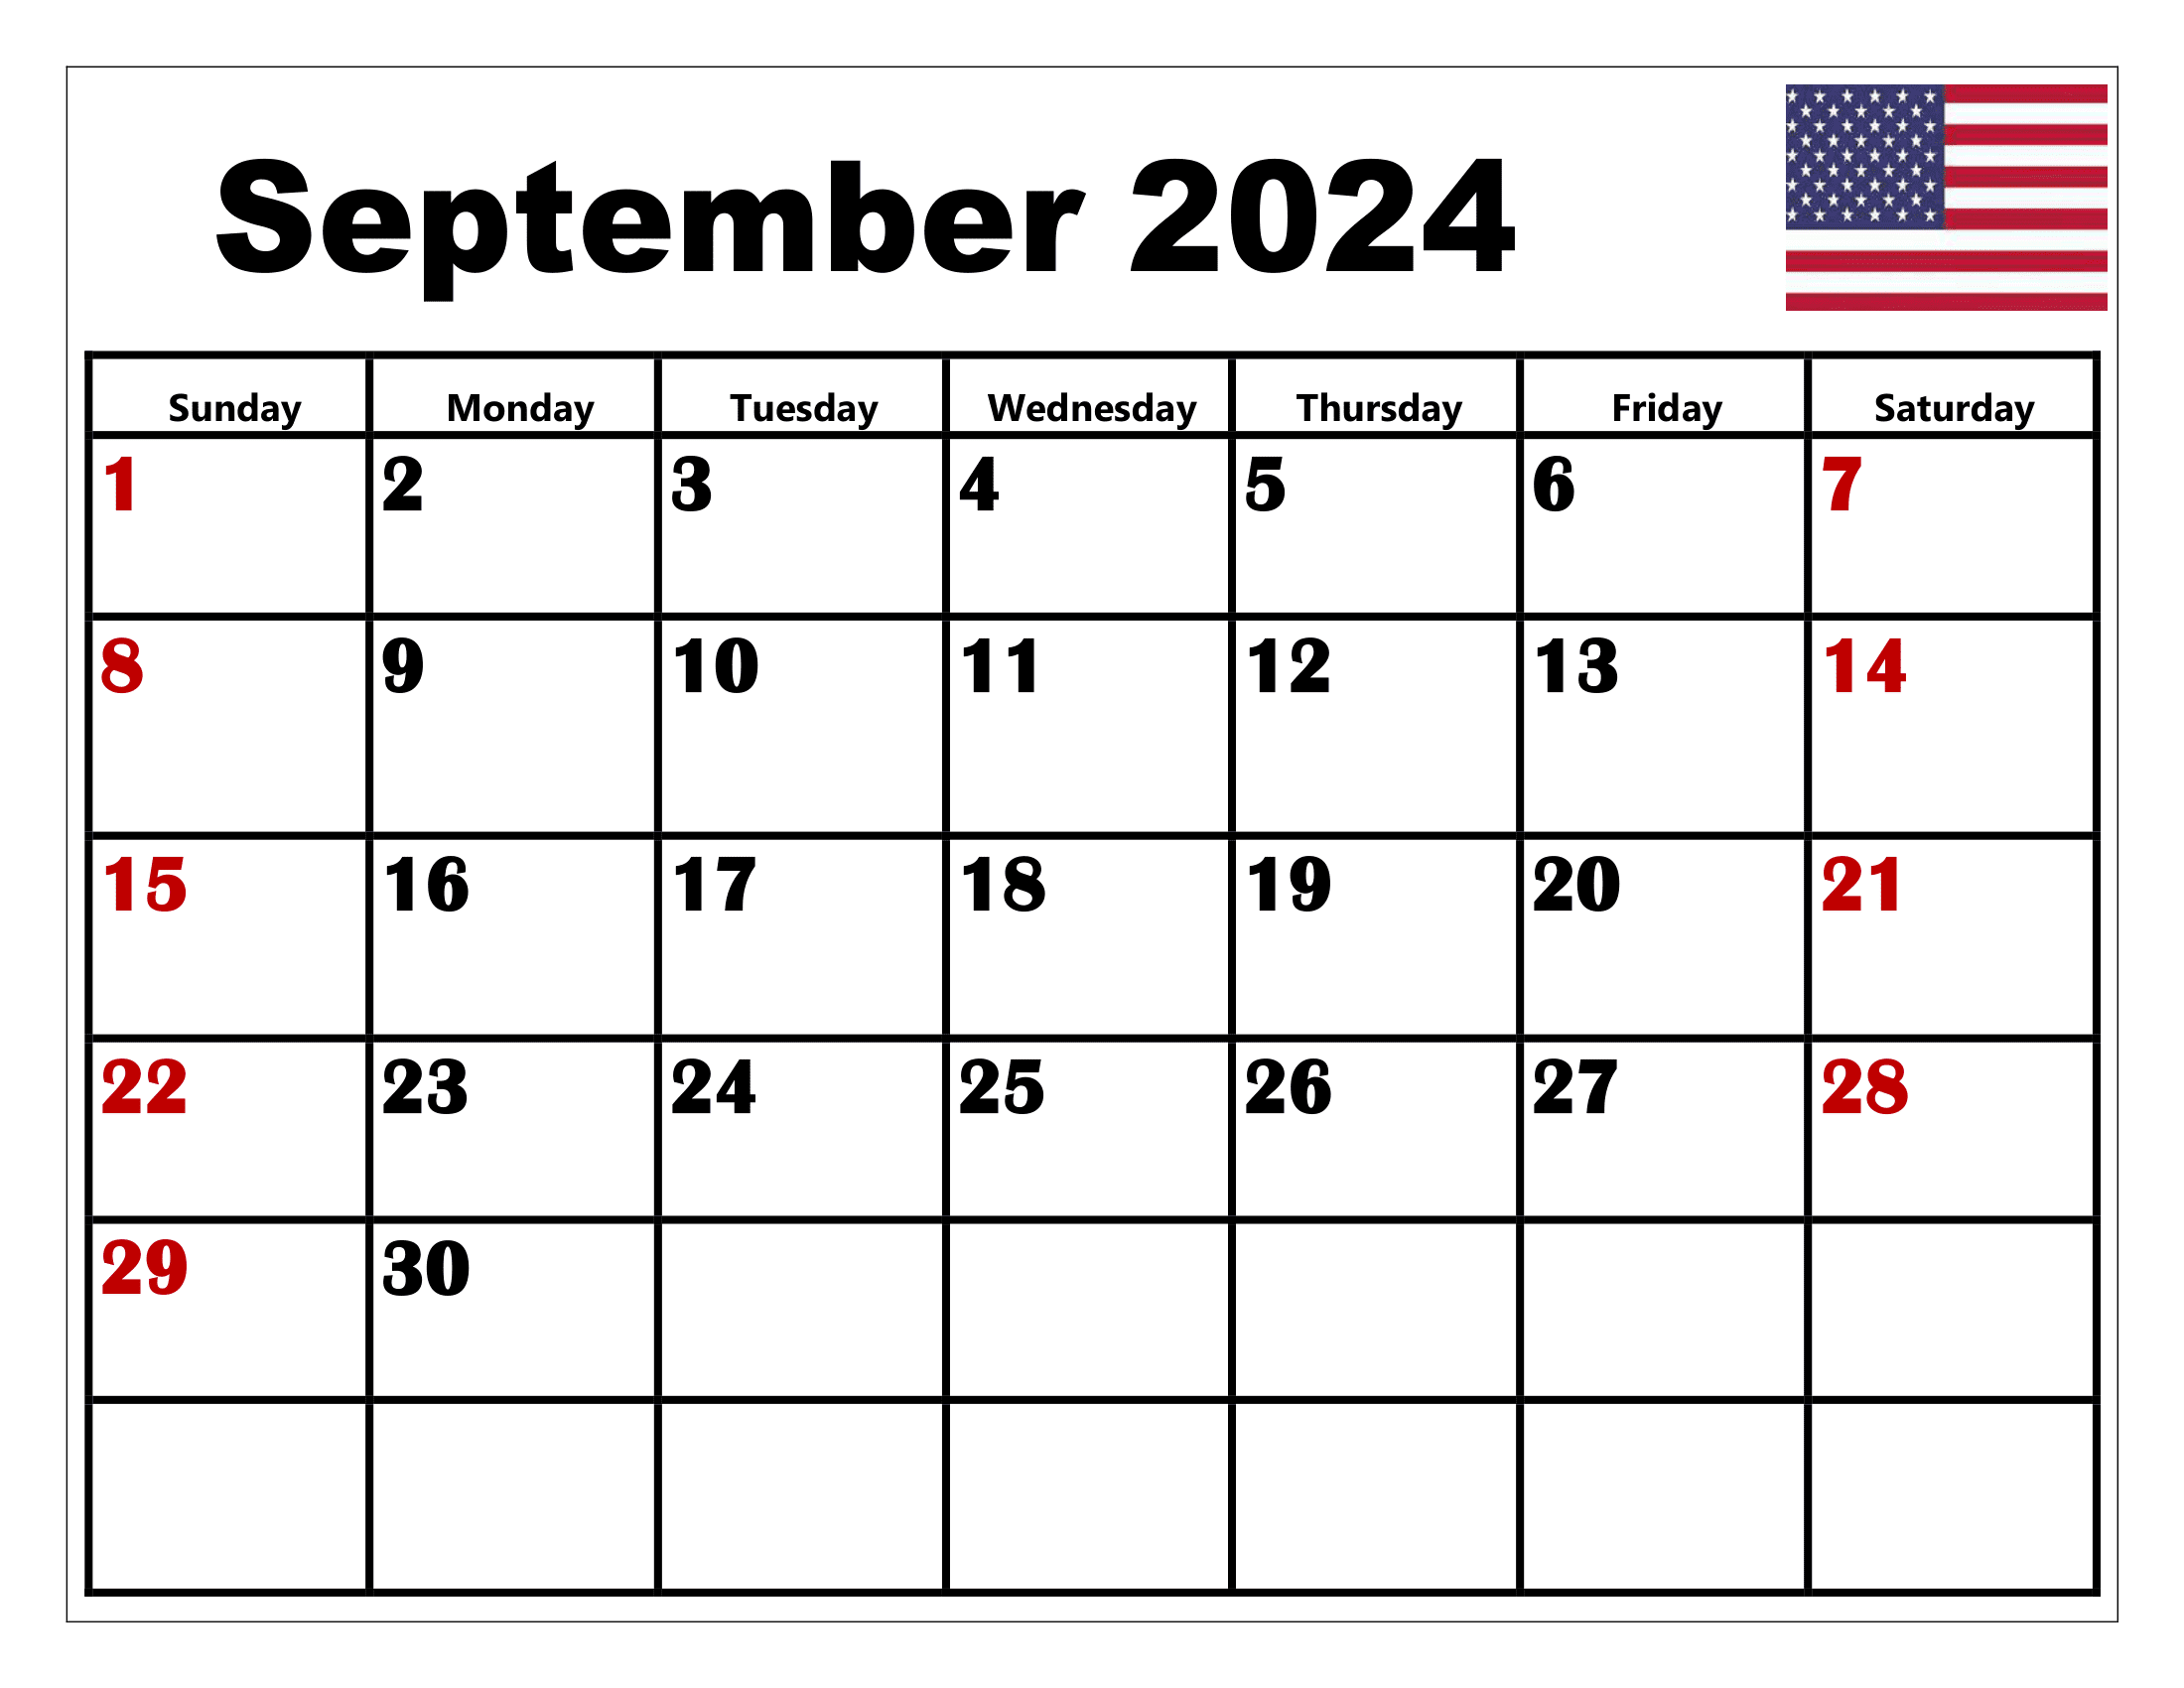 September 2024 Calendar Printable Pdf With Holidays for Printable September 2024 Calendar With Holidays